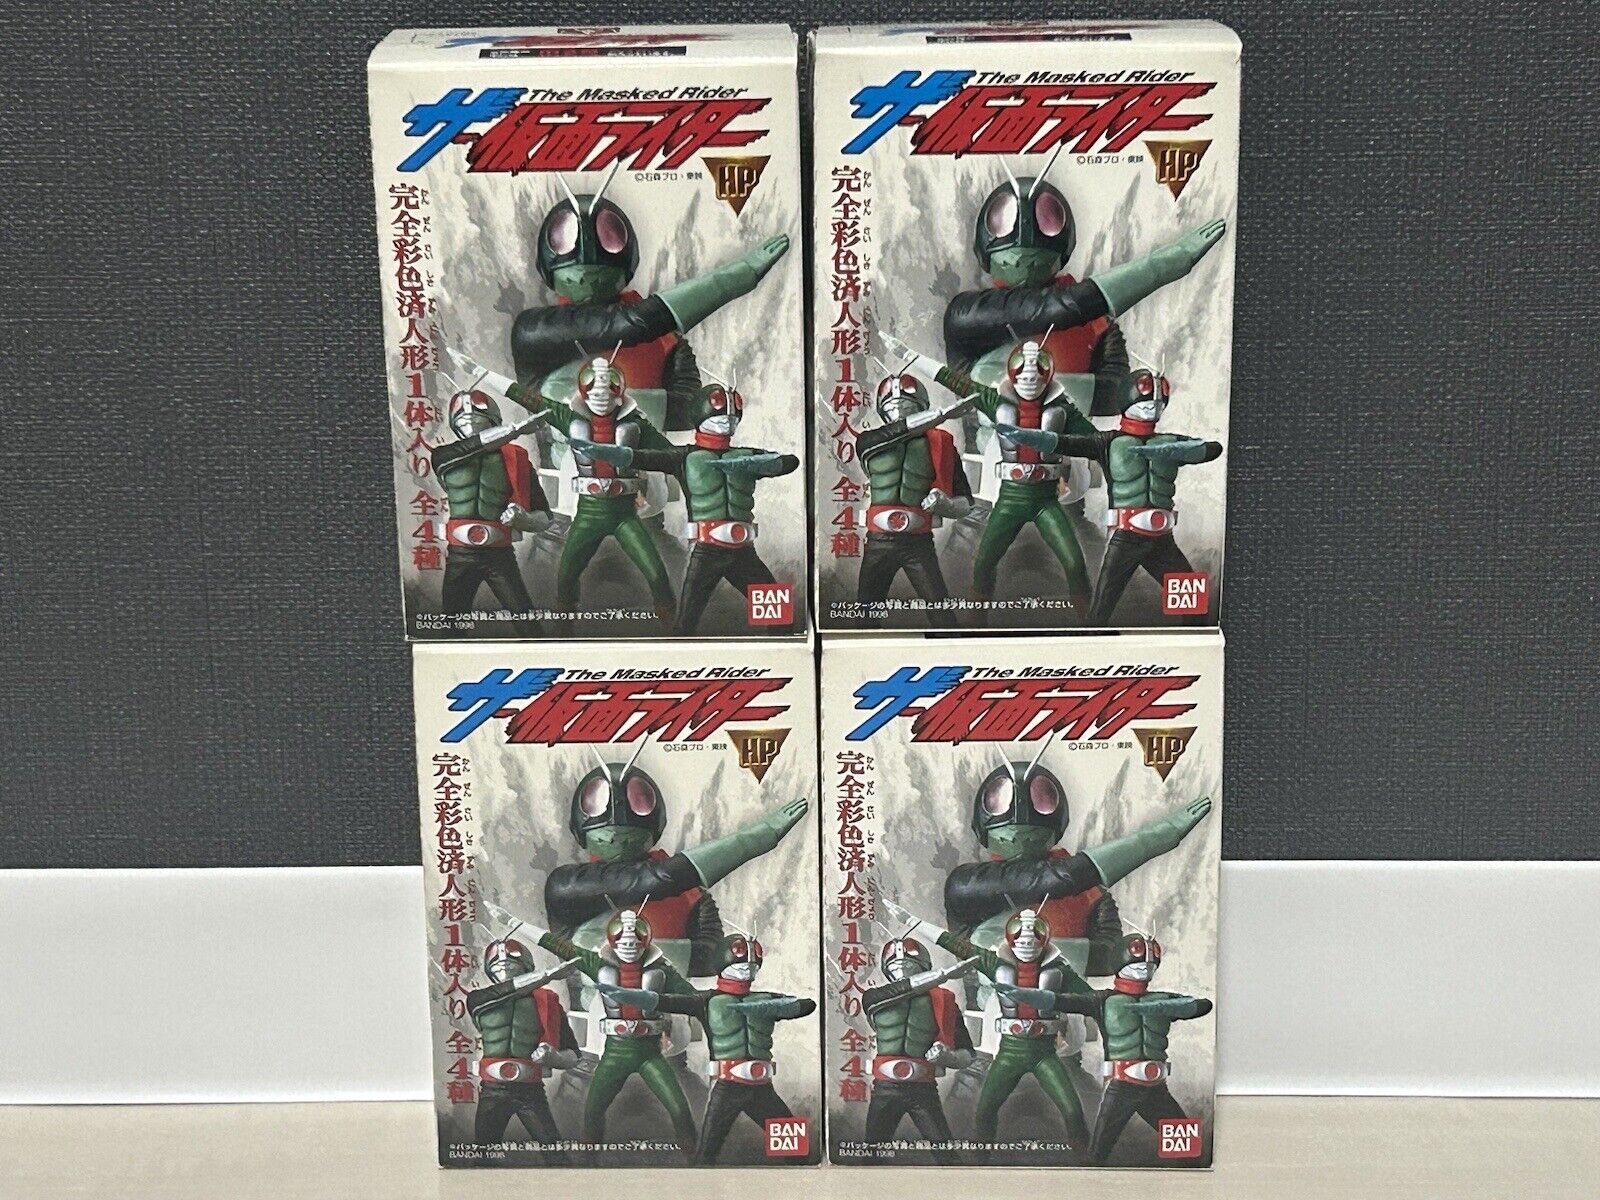 Kamen Rider (Masked Rider) Figure Bandai 1998 Complete set of 4 pieces Rare 2052